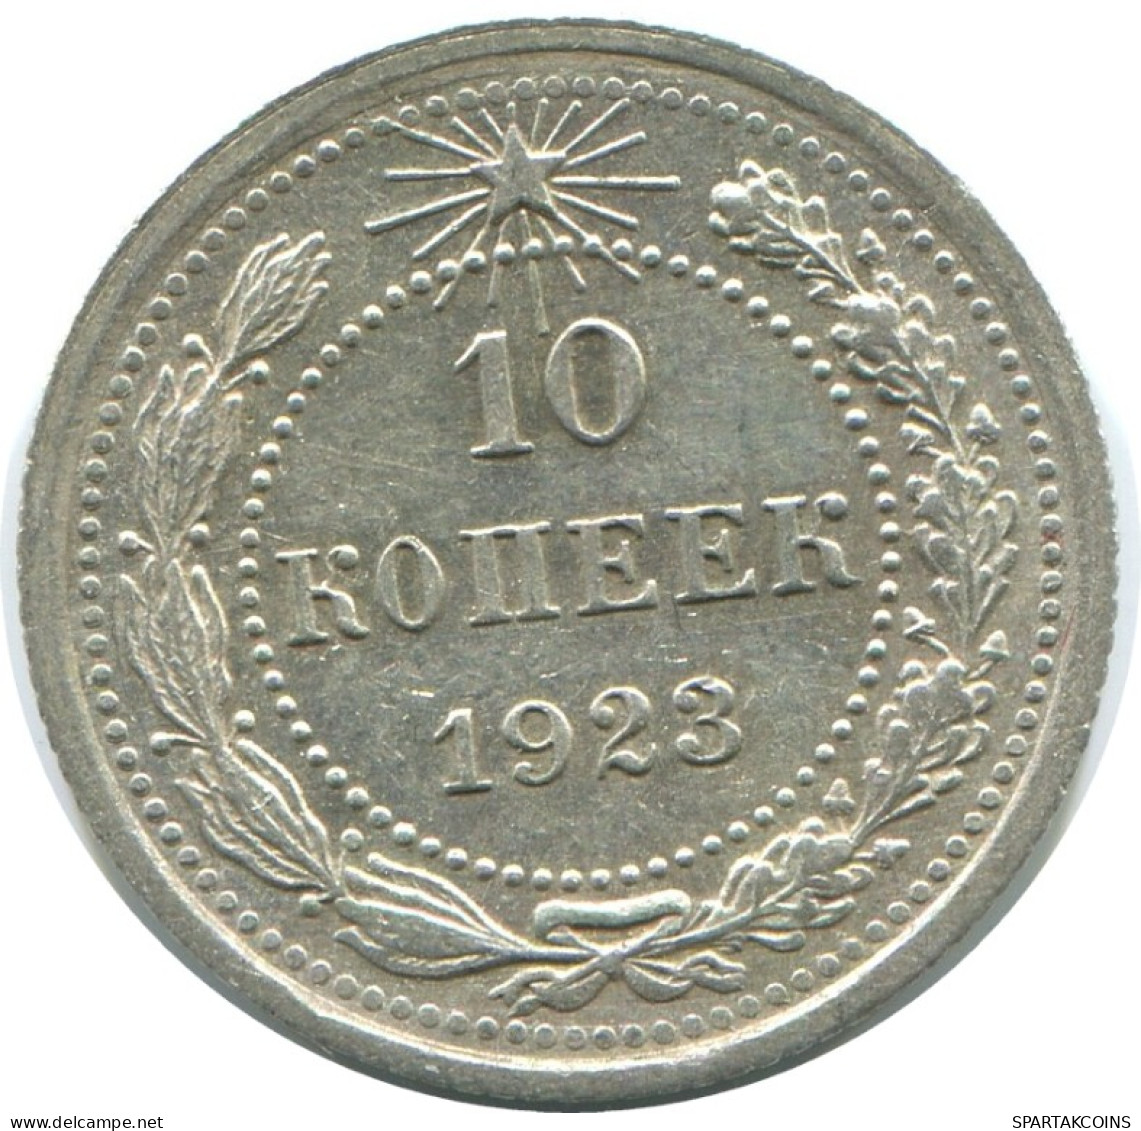 10 KOPEKS 1923 RUSSIA RSFSR SILVER Coin HIGH GRADE #AE972.4.U.A - Russland